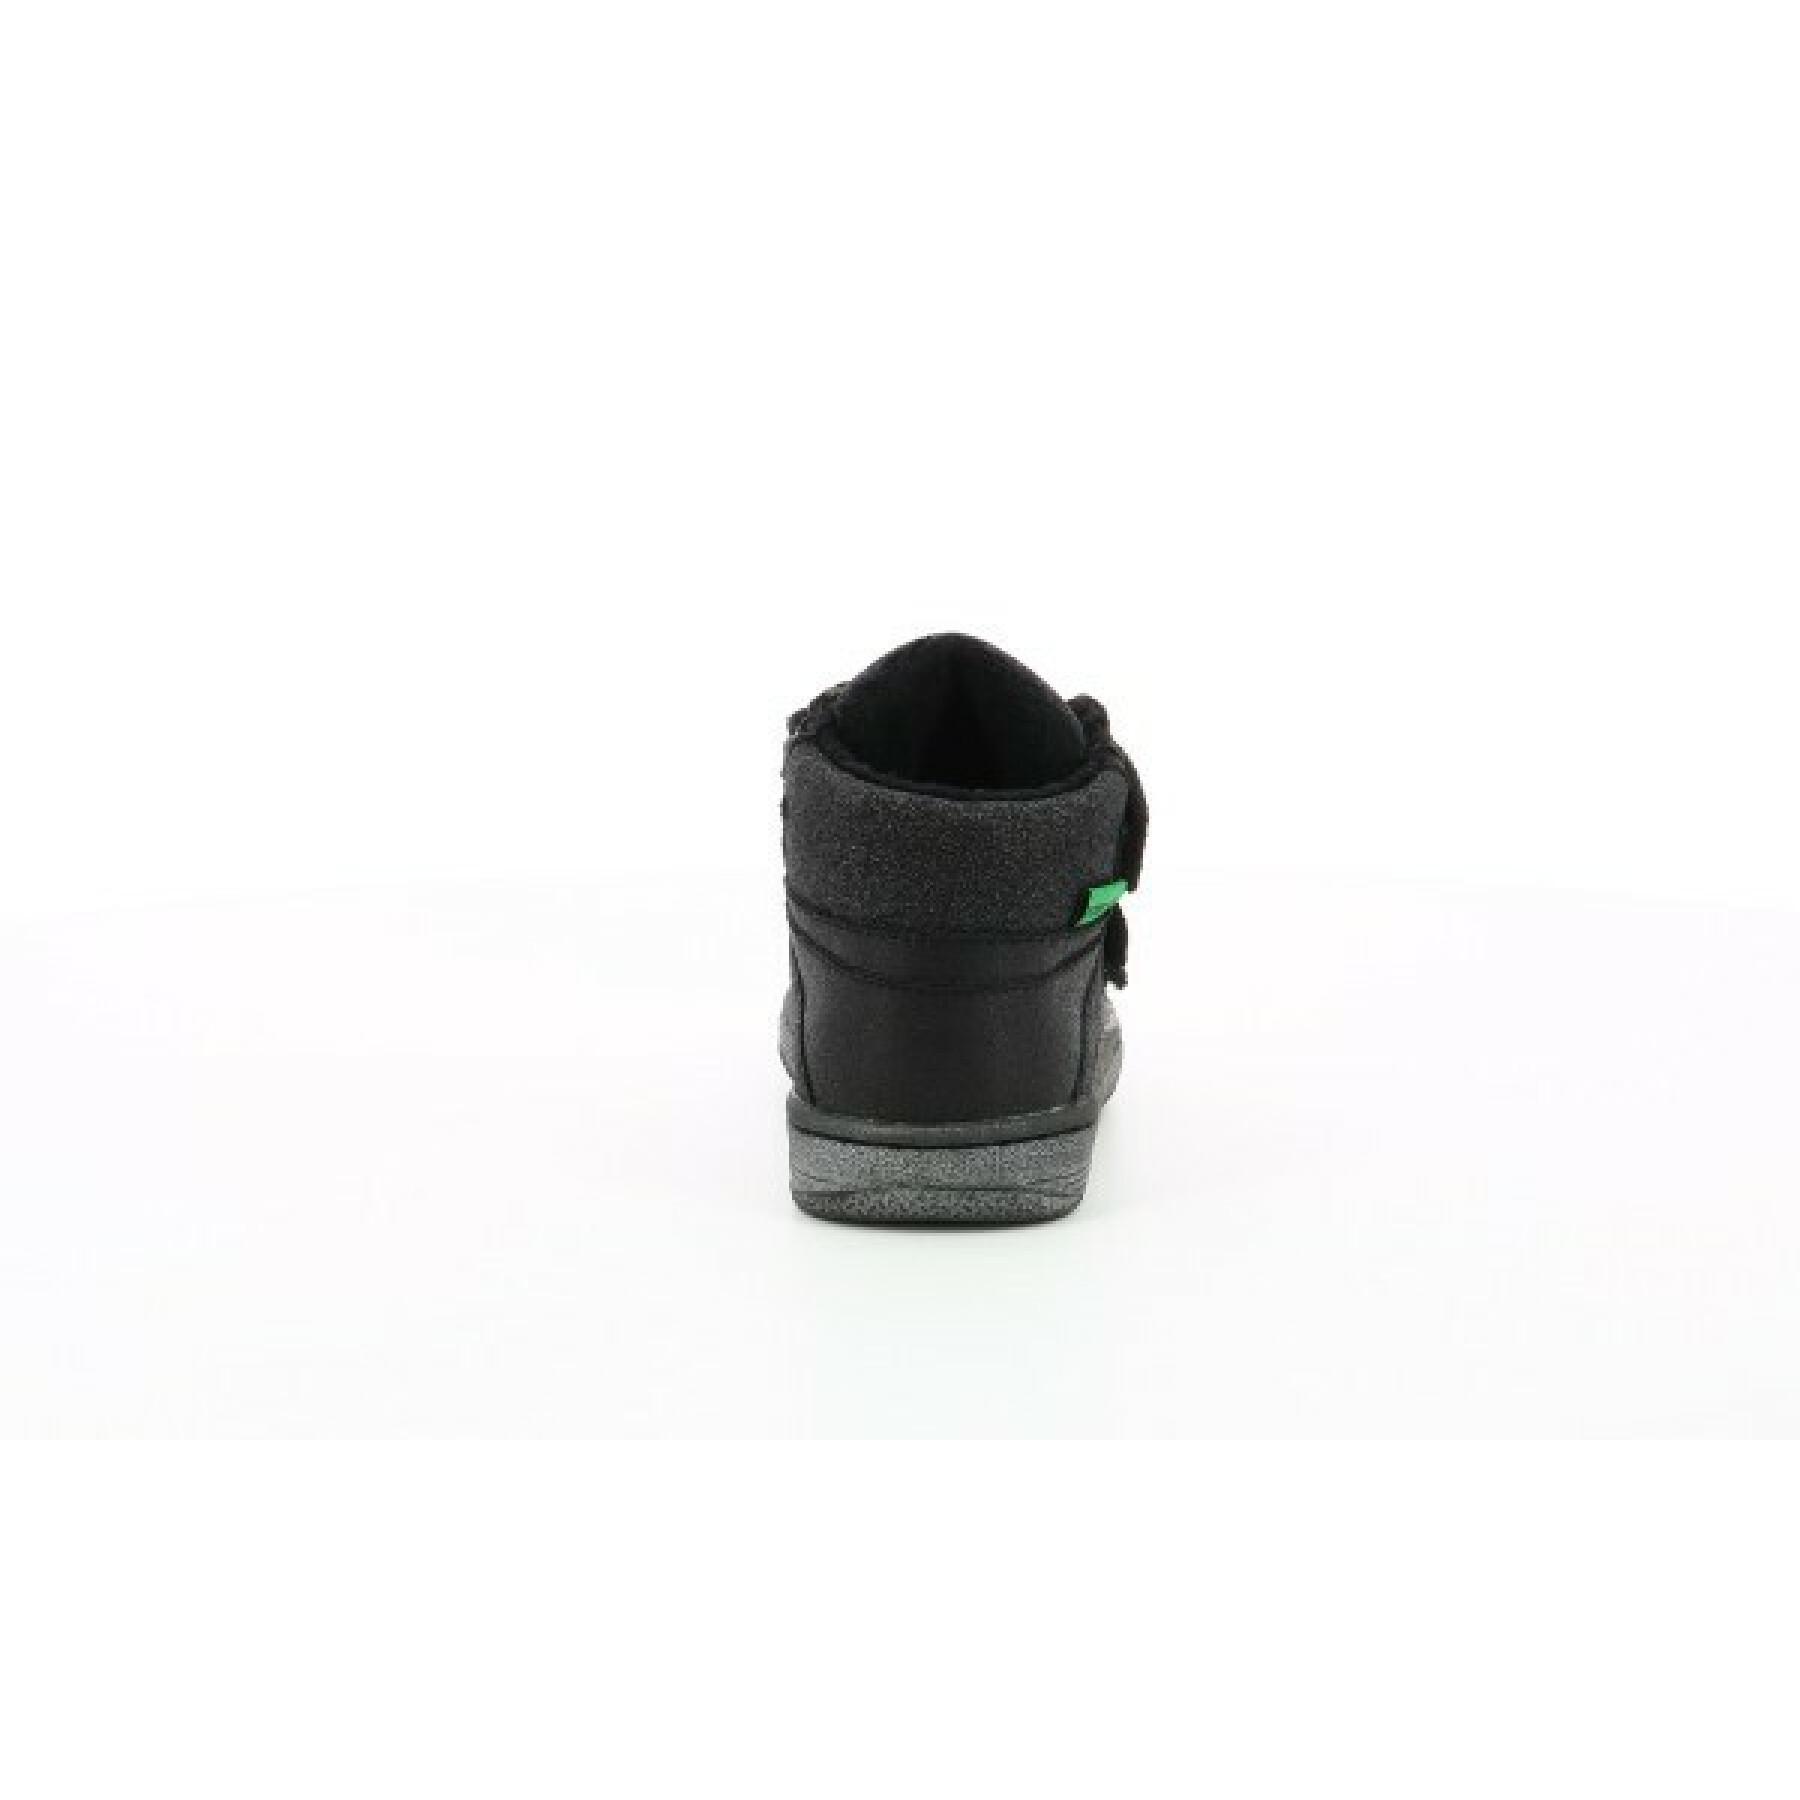 Sneakers für Babies Kickers lohan